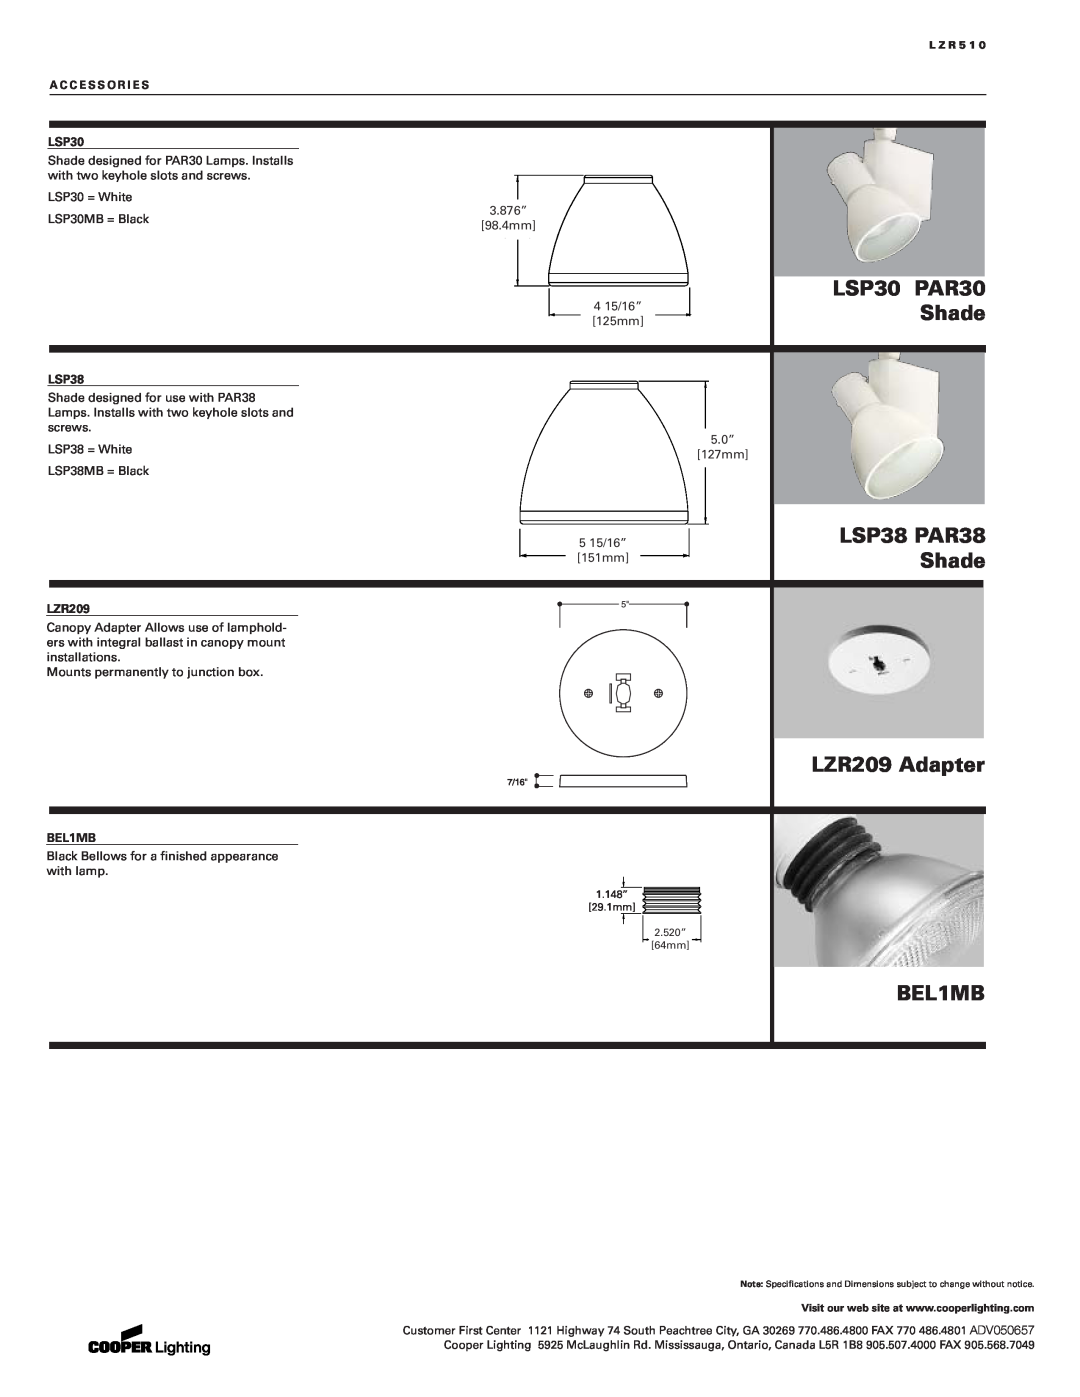 Cooper Lighting LZR510 manual LSP30 PAR30, Shade, LSP38 PAR38, LZR209 Adapter, BEL1MB 